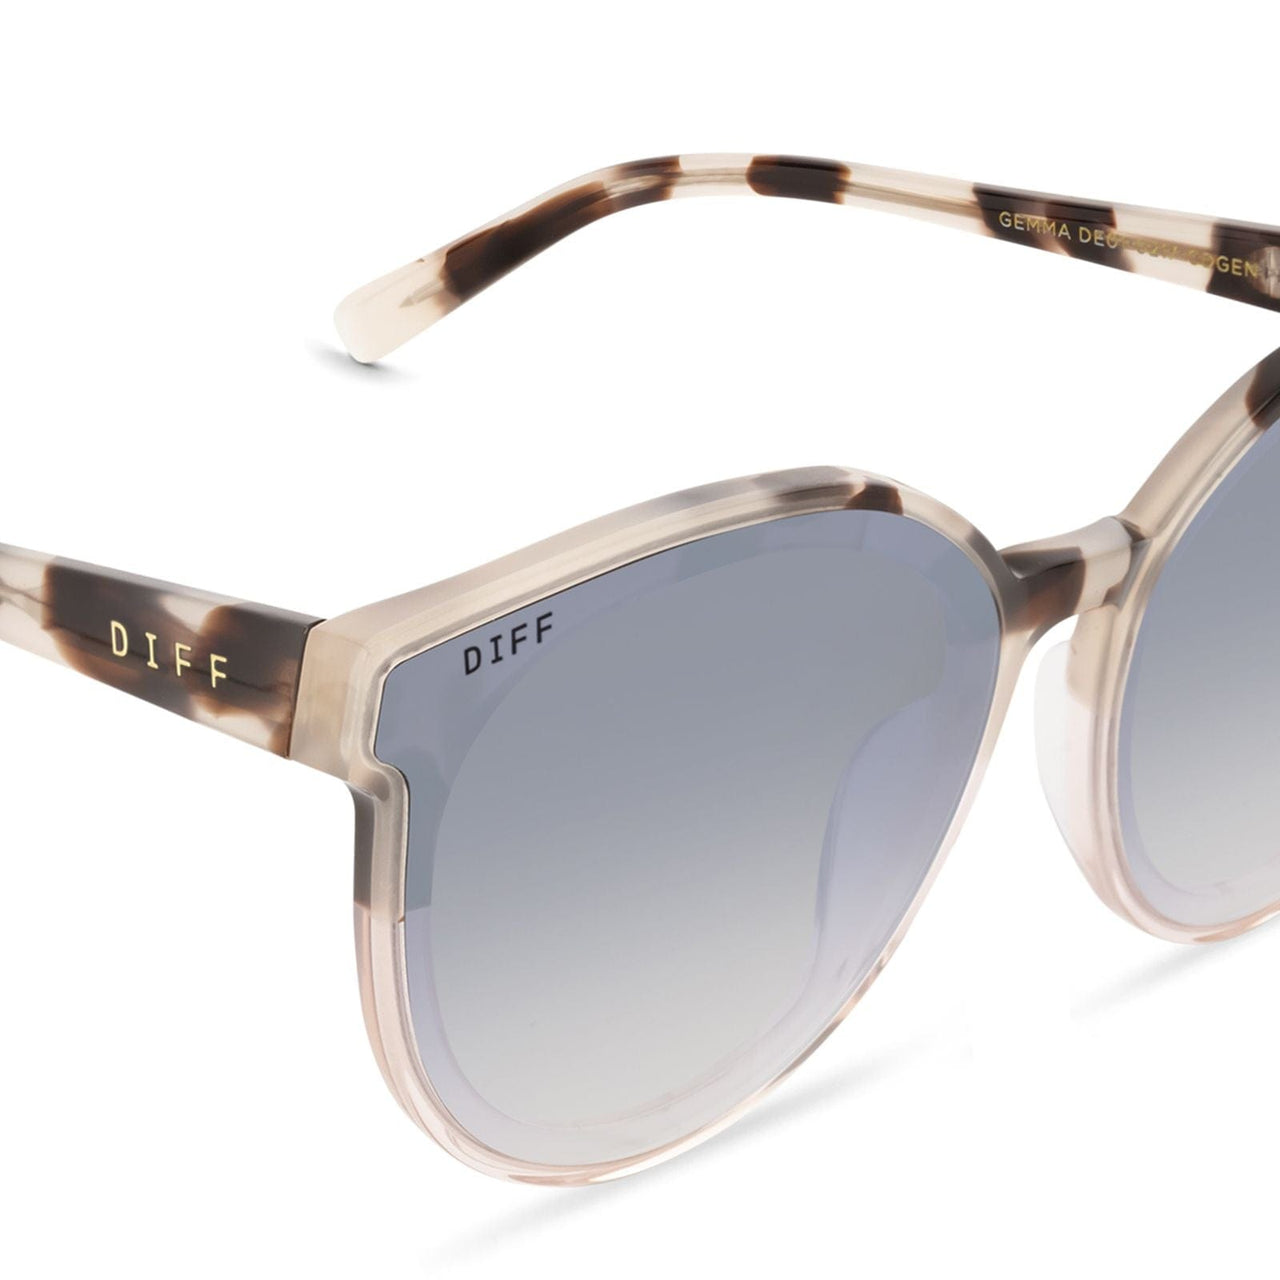 Gemma Cream Tortoise Sandstron Grey Gradient Flash Sunglasses, Sunglasses by DIFF Sunglasses | LIT Boutique